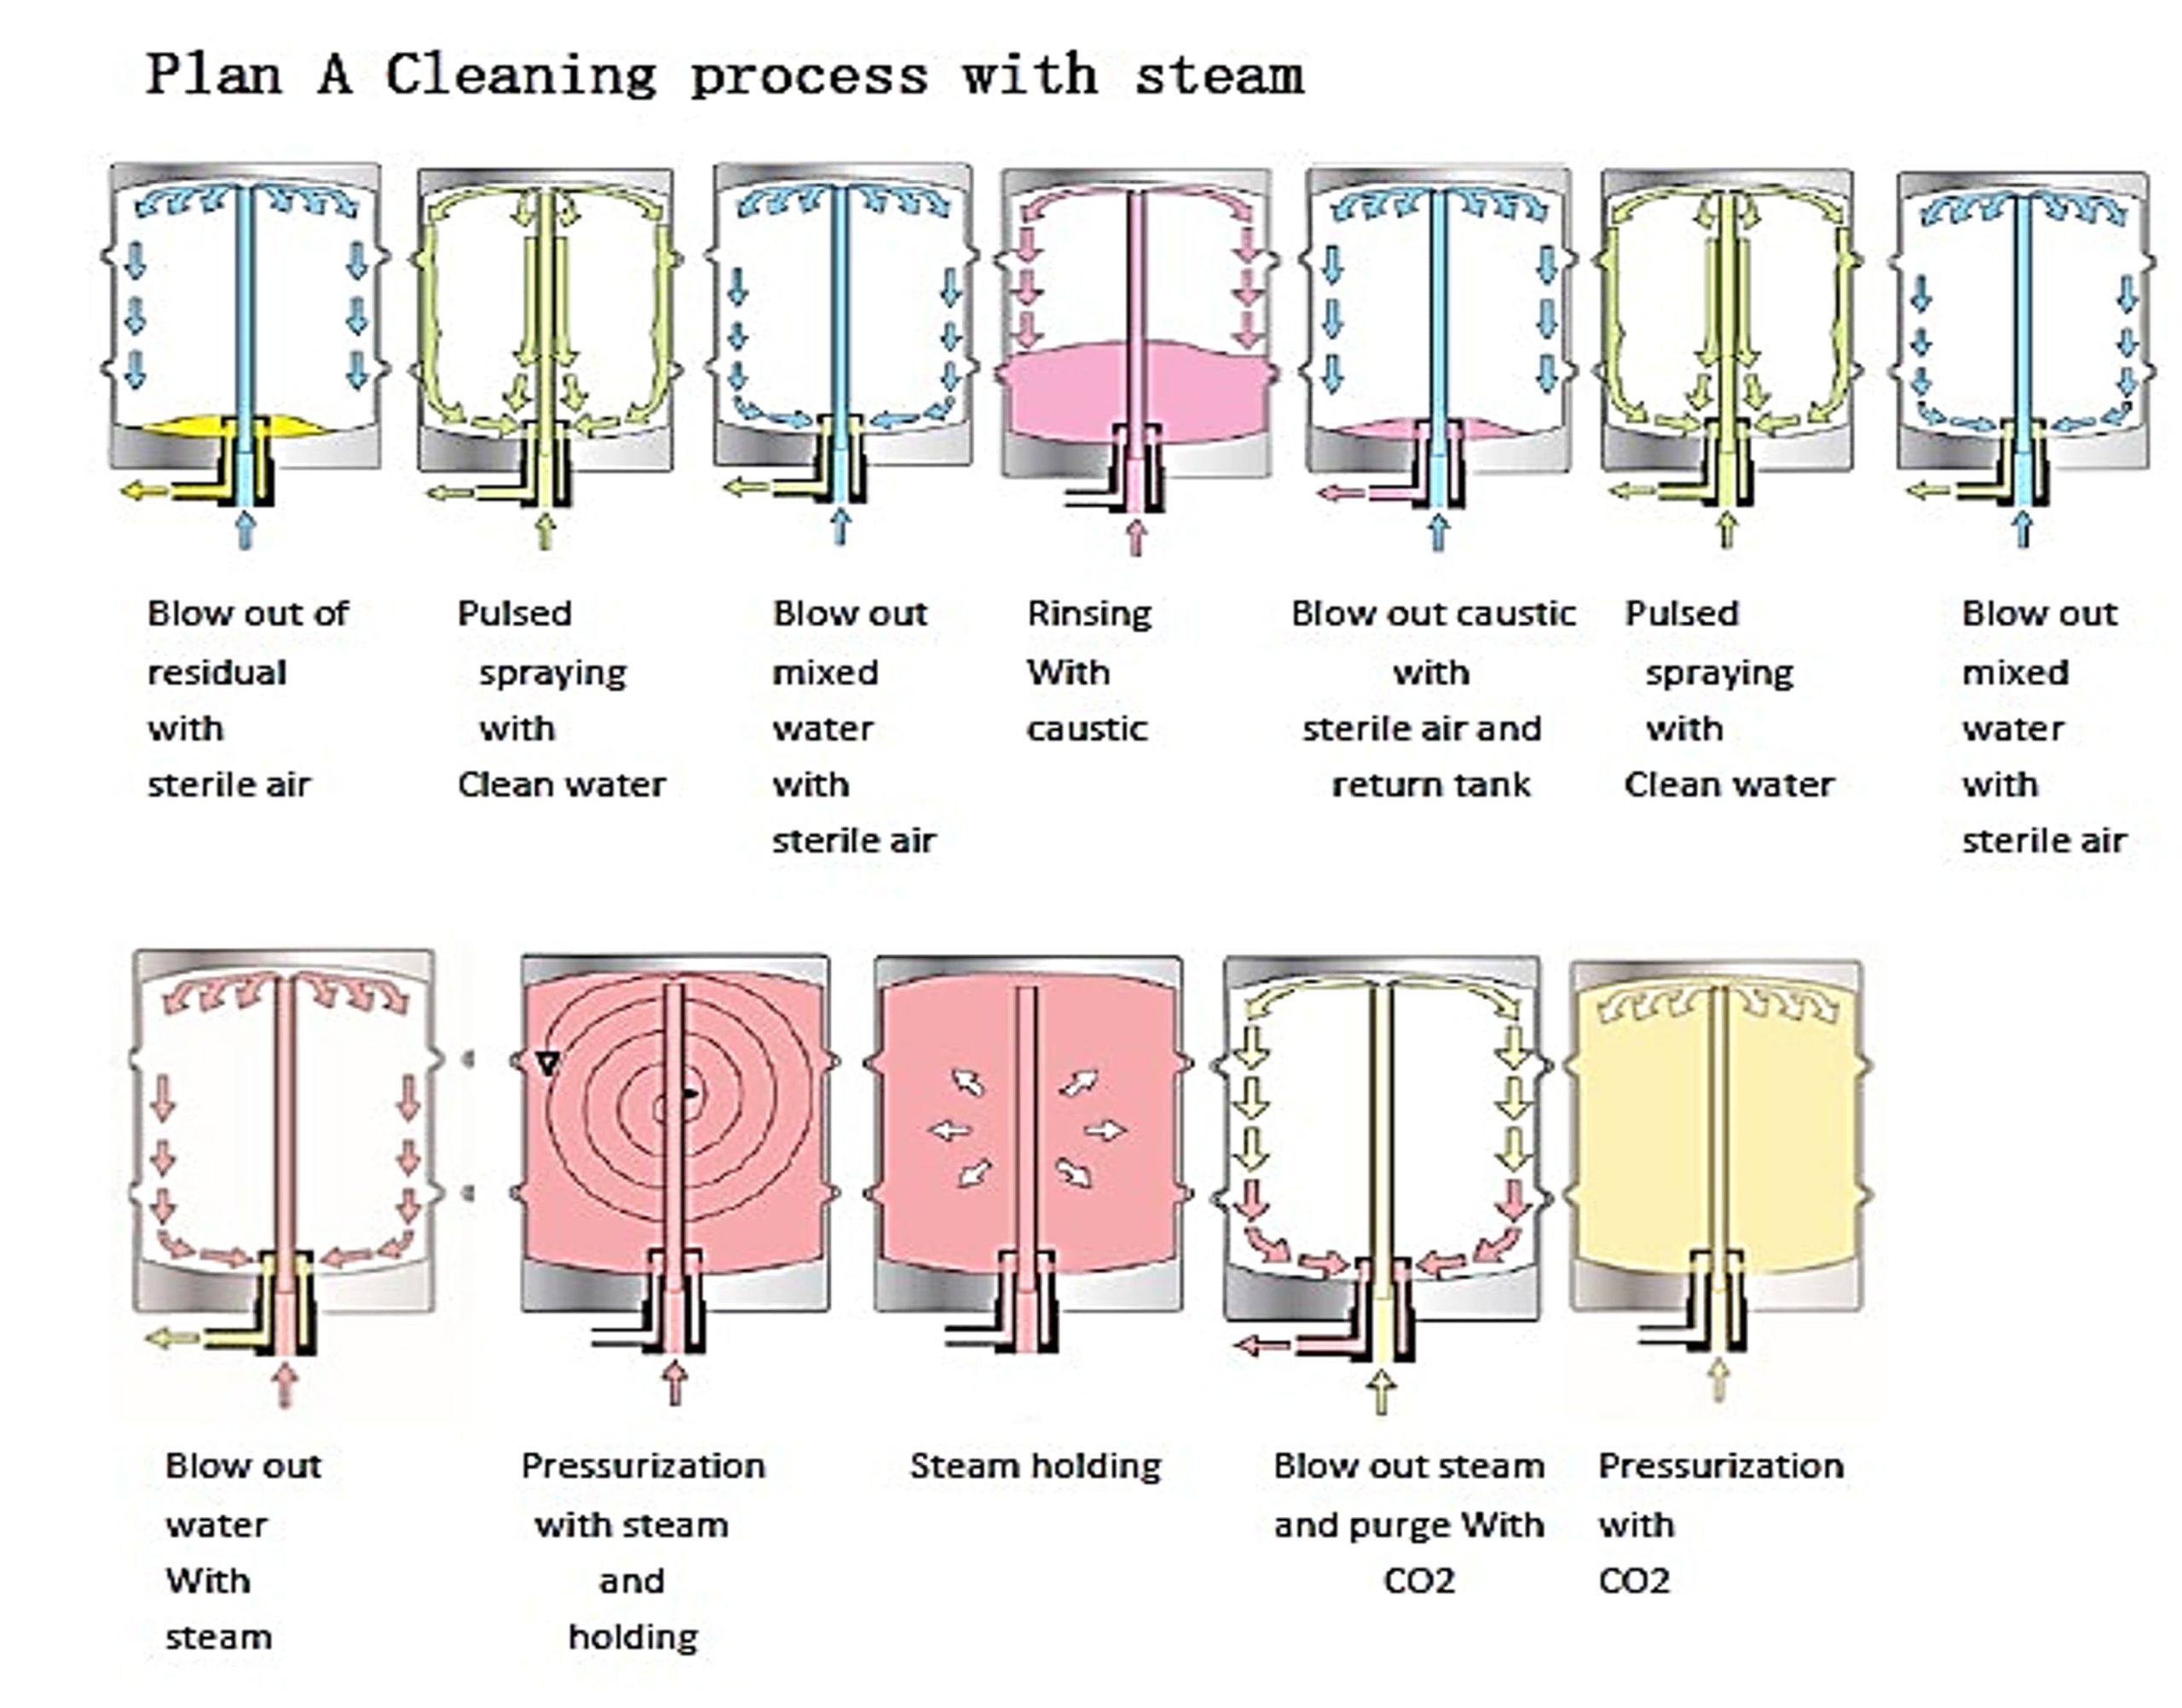 SKE-KW-Ⅱ | 蒸気による洗浄工程のプラン